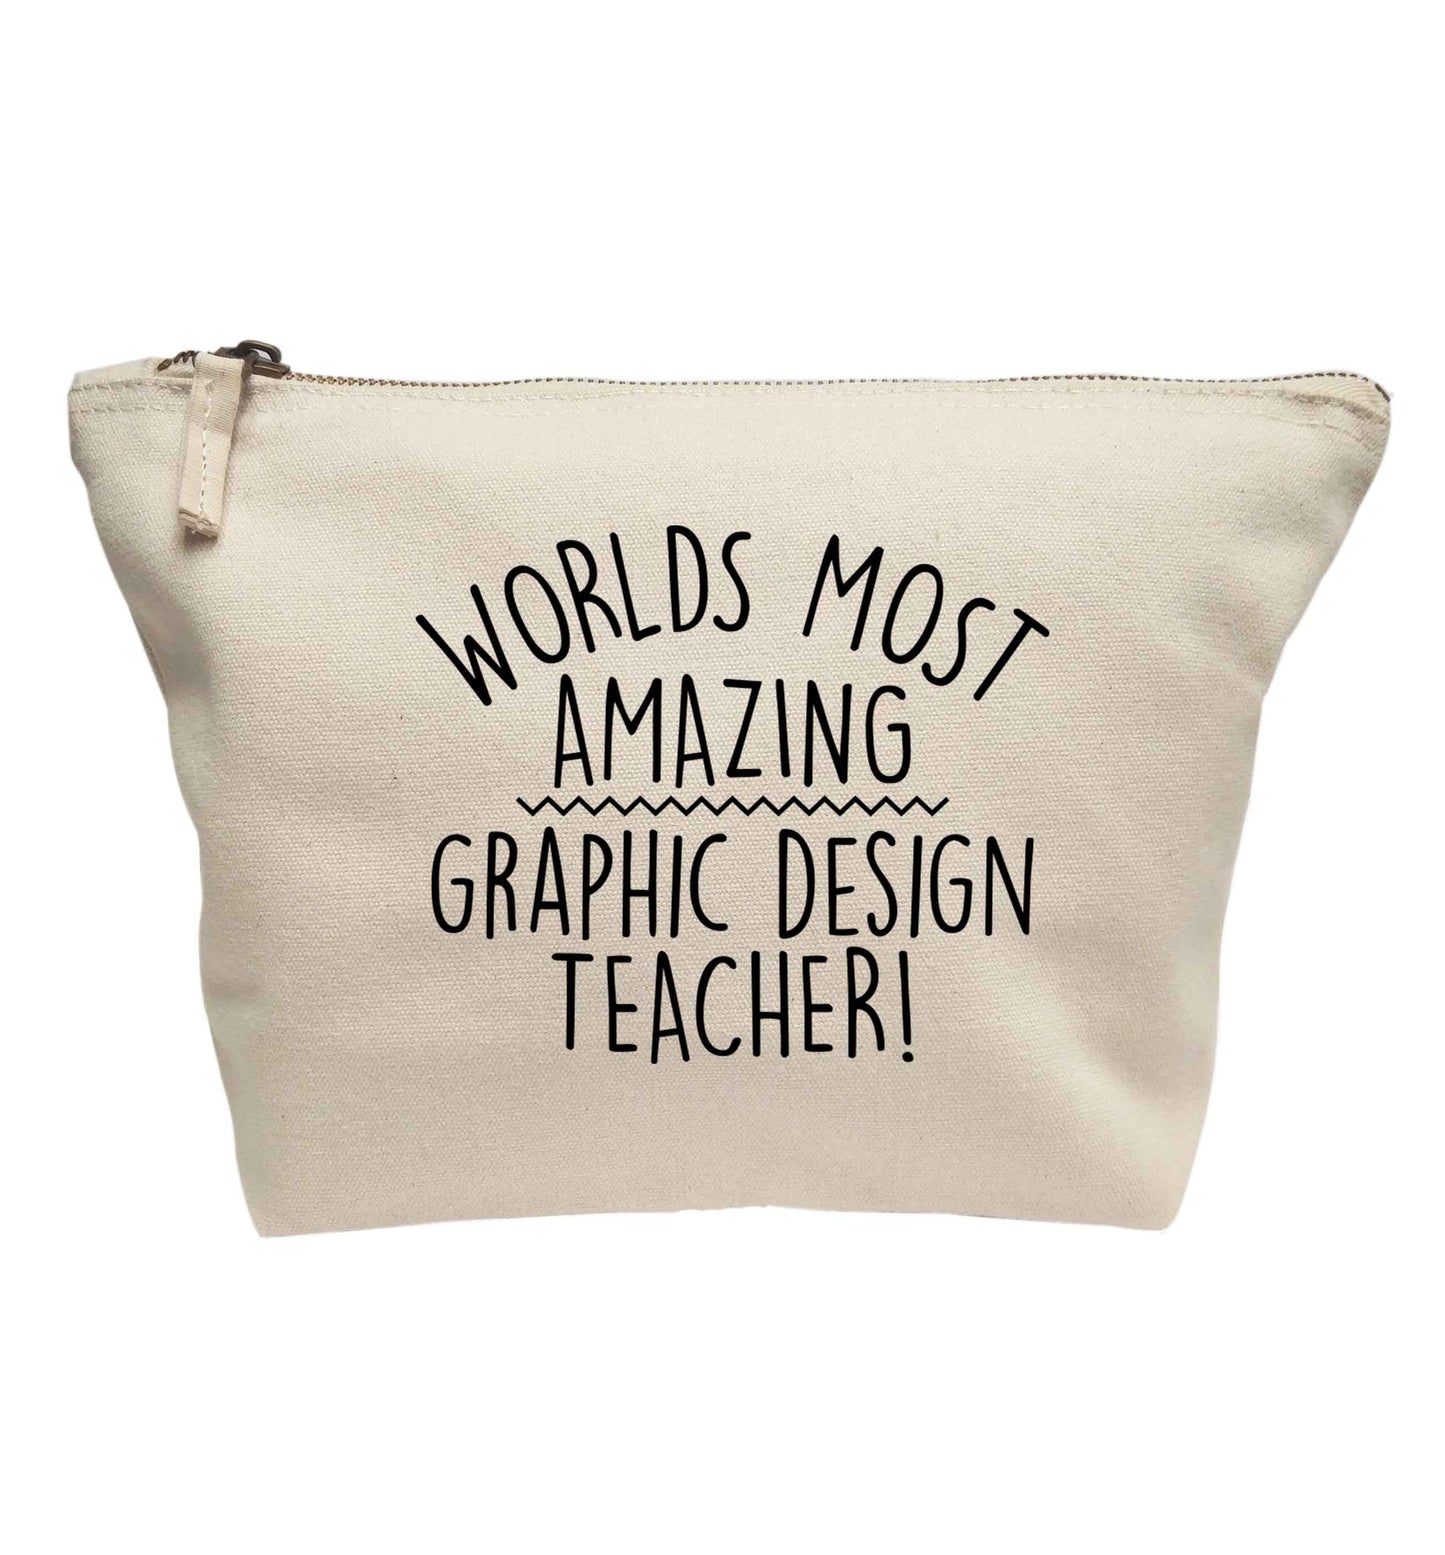 Worlds most amazing graphic design teacher | Makeup / wash bag